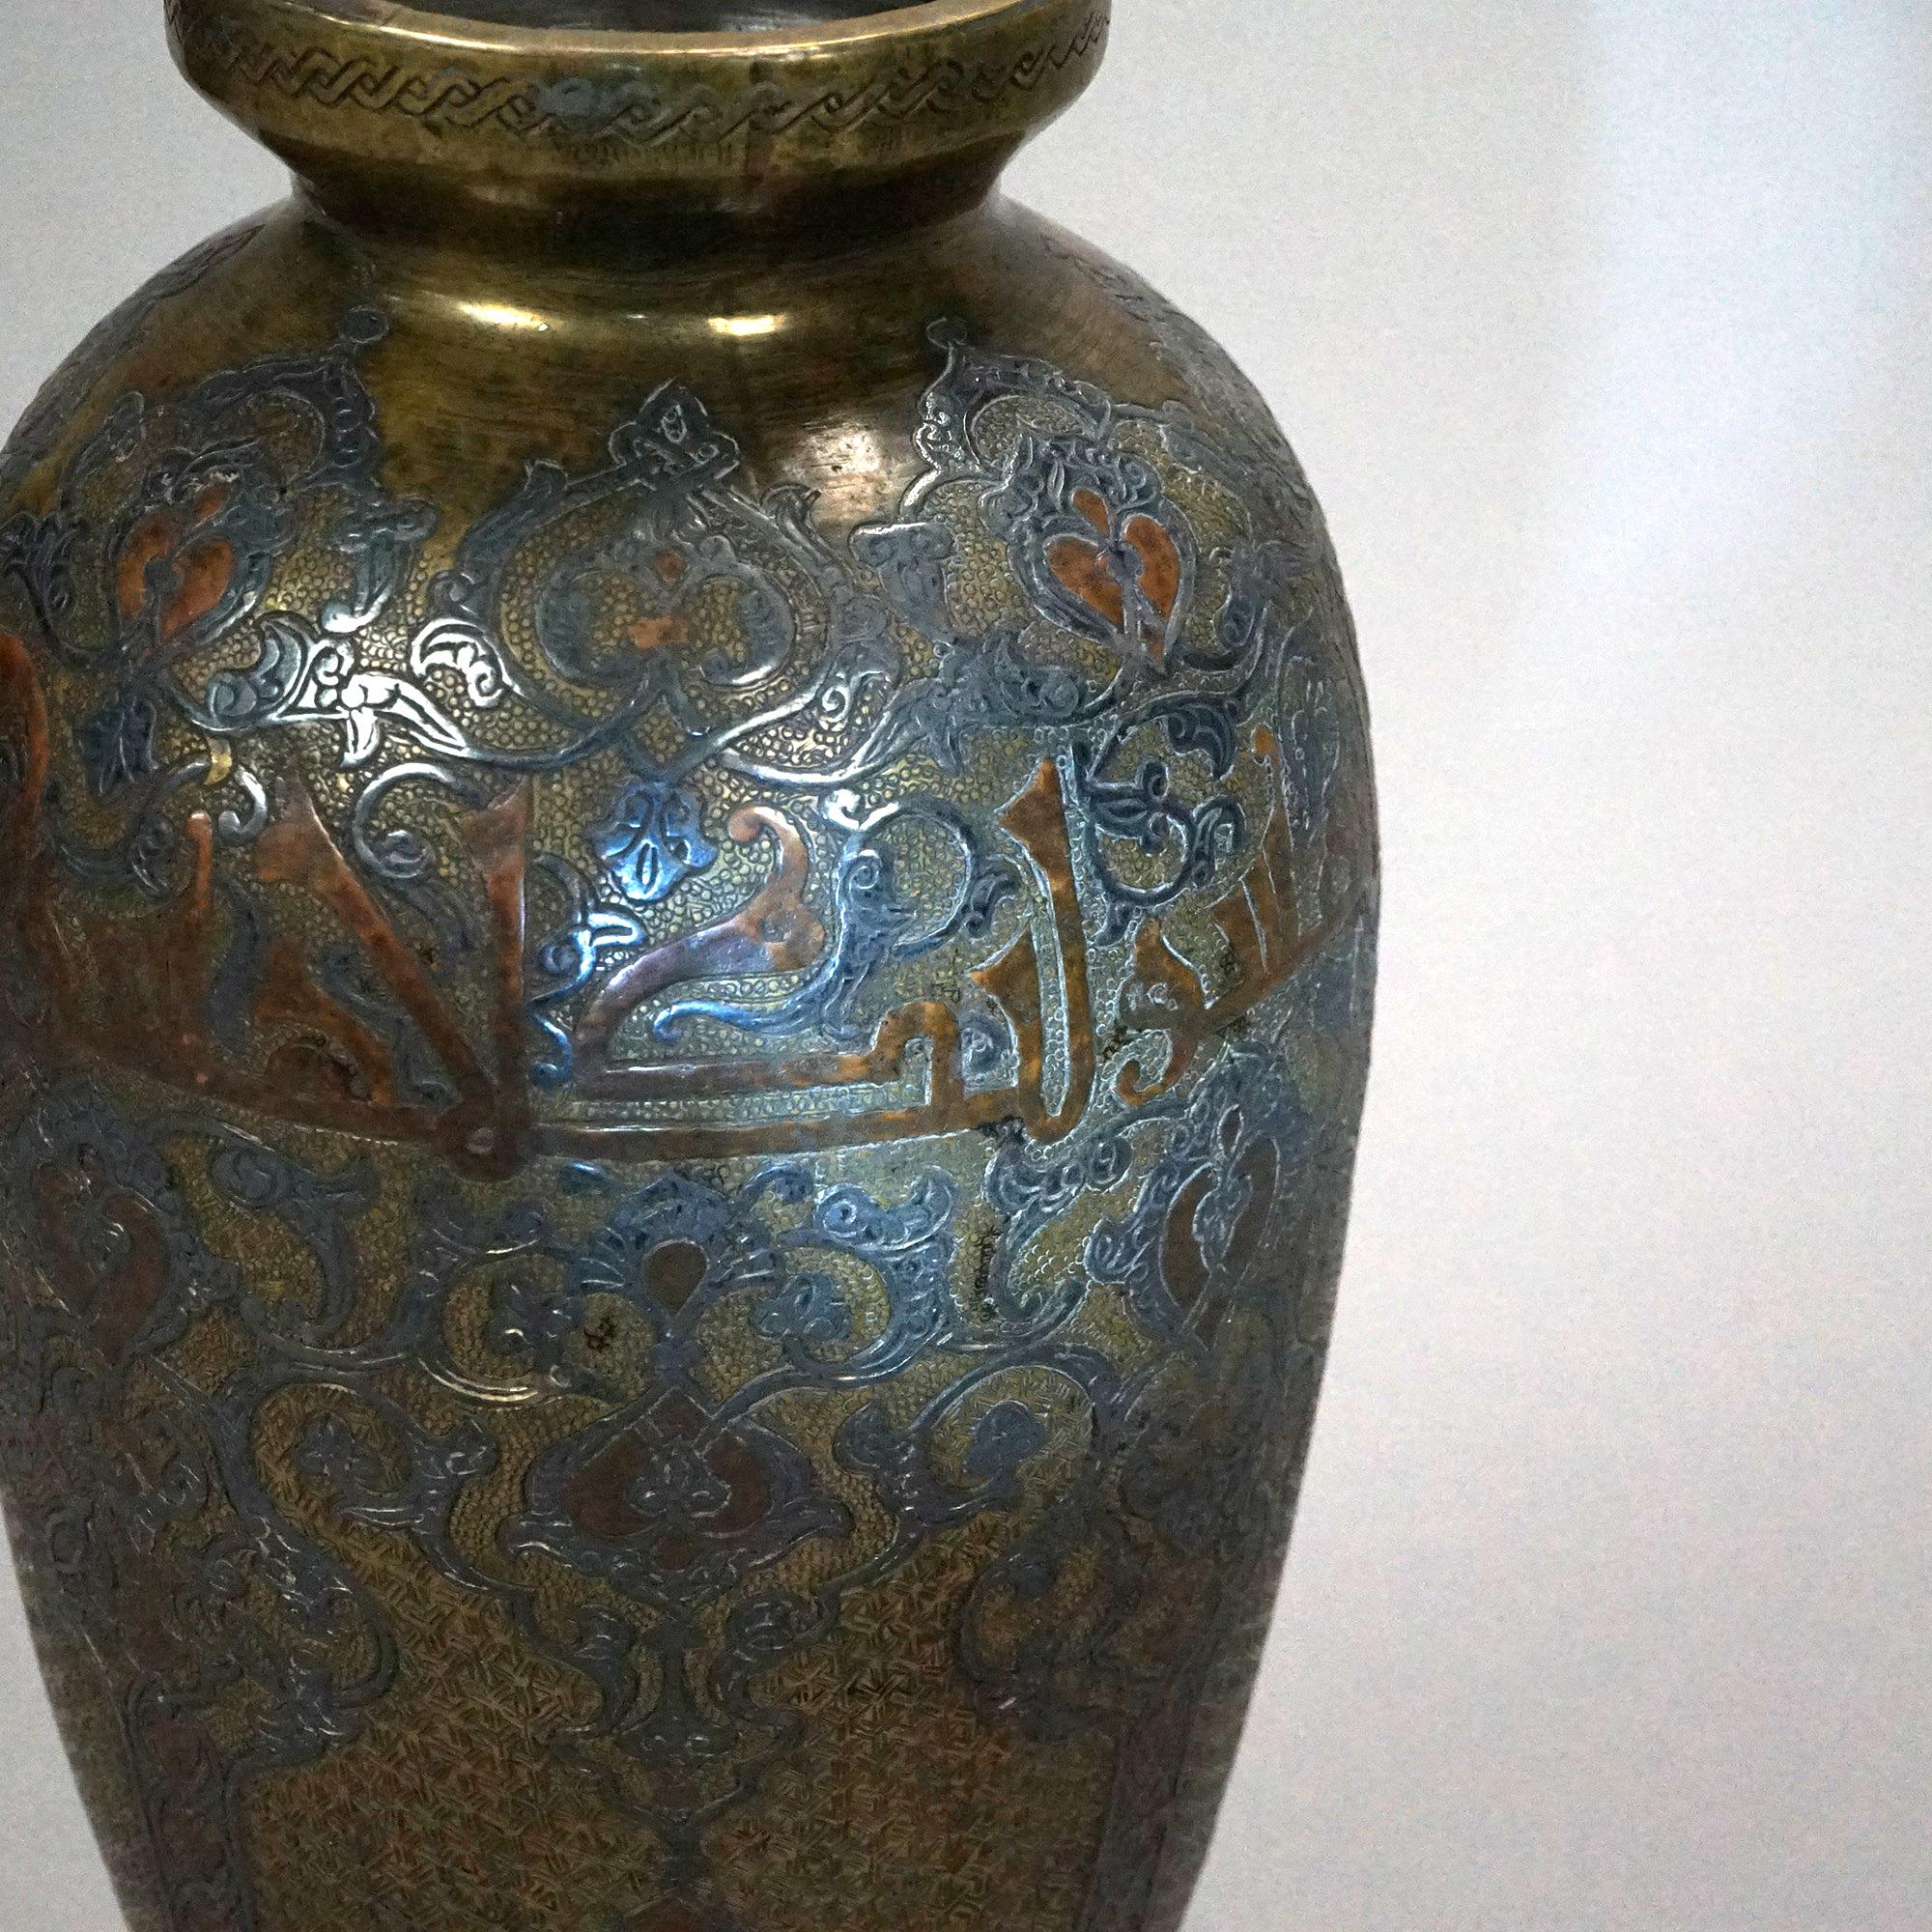 Asian Antique Persian Silver & Copper Inlaid Bronze Vase 18th-19th C